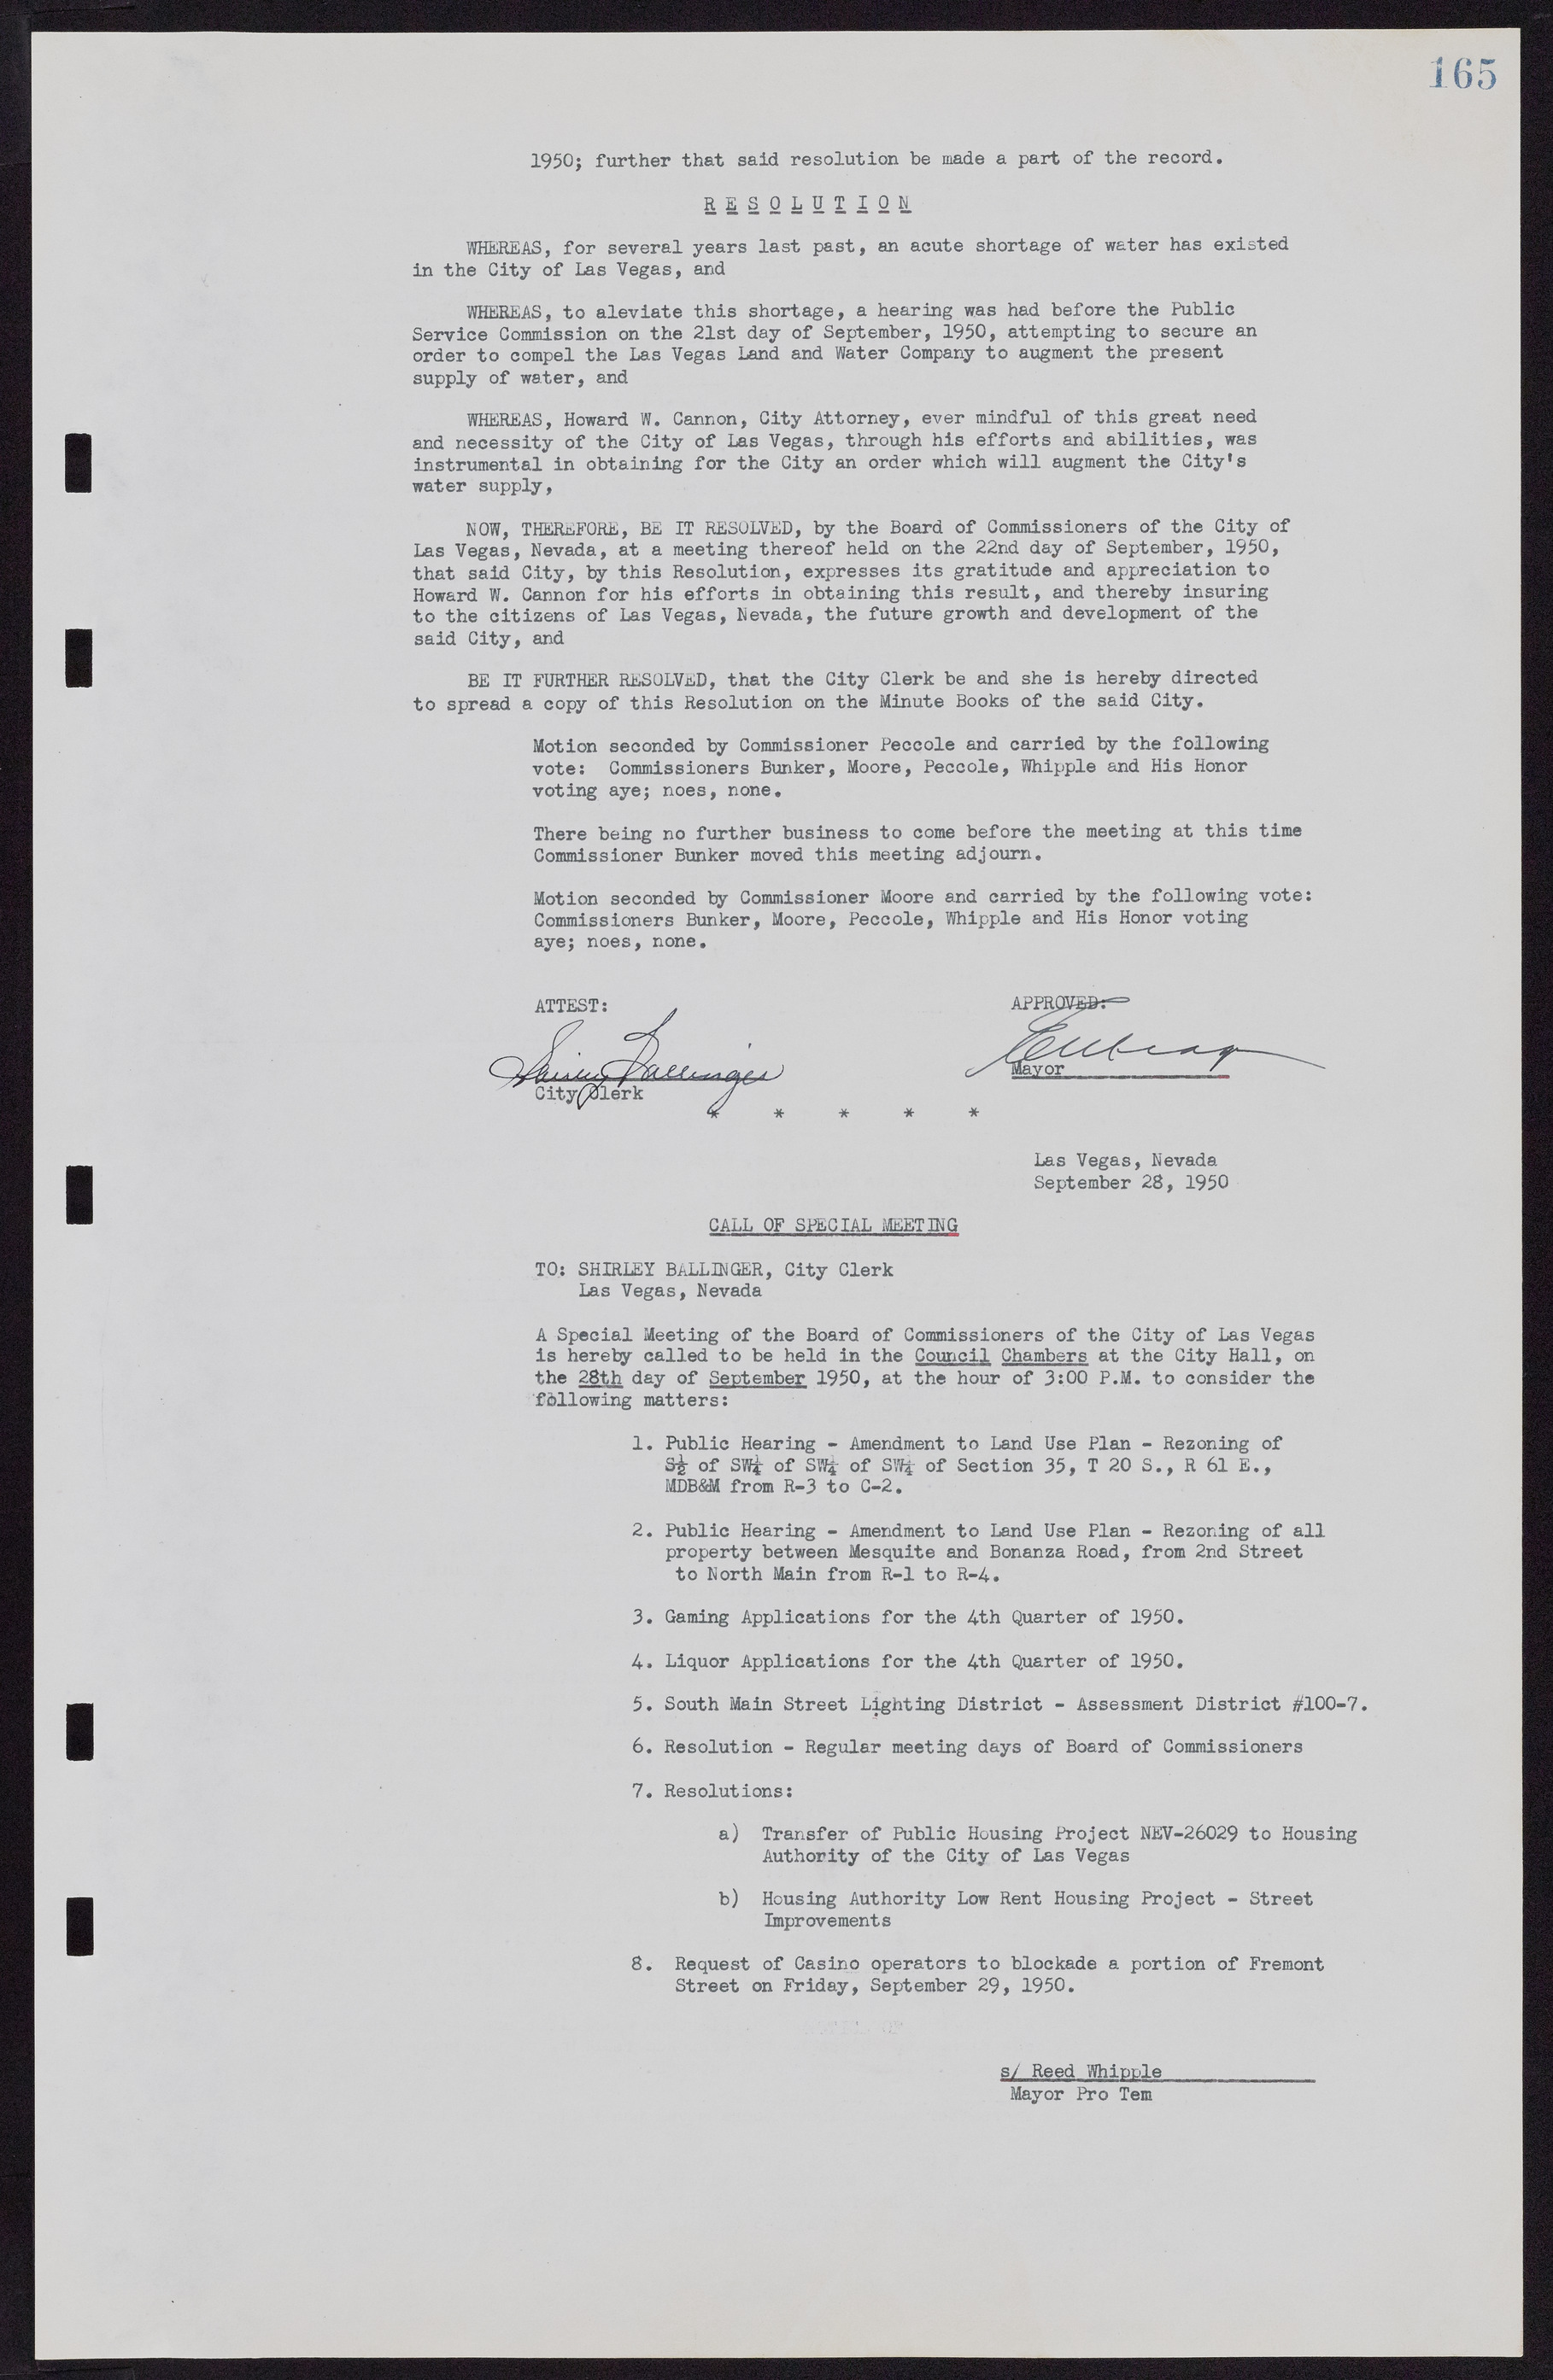 Las Vegas City Commission Minutes, November 7, 1949 to May 21, 1952, lvc000007-175